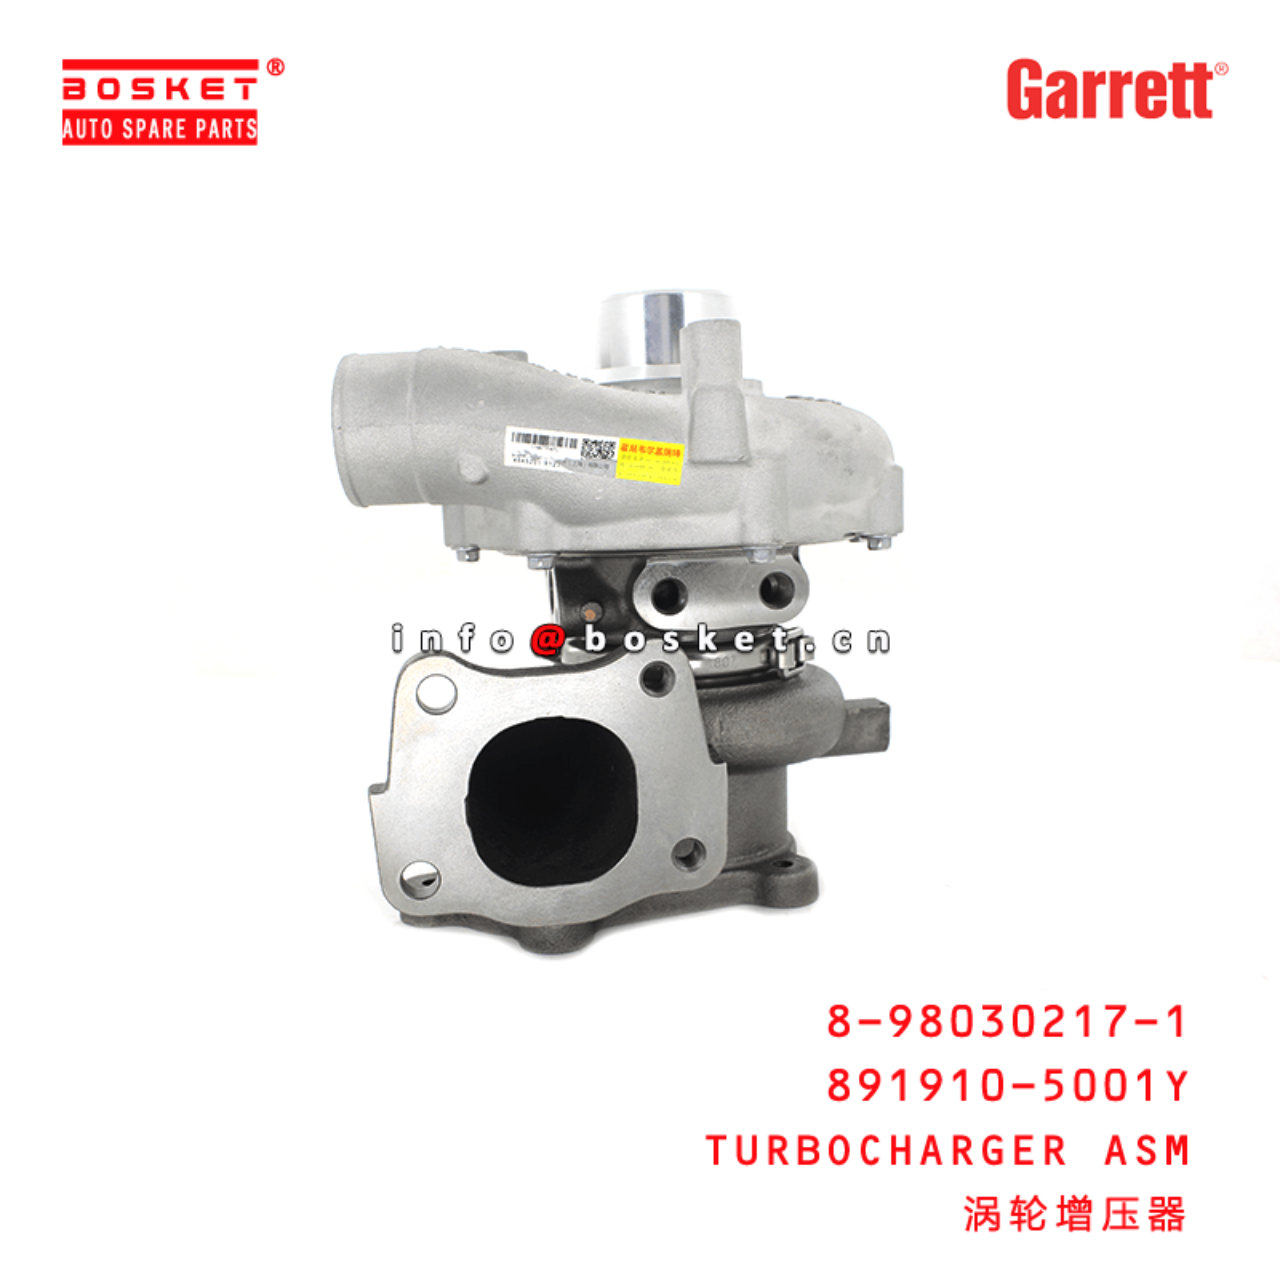 Garrett Genuine 891910-5001Y 8-98030217-1 Turbocharger Assembly Suitable for ISUZU XD 4HK1 